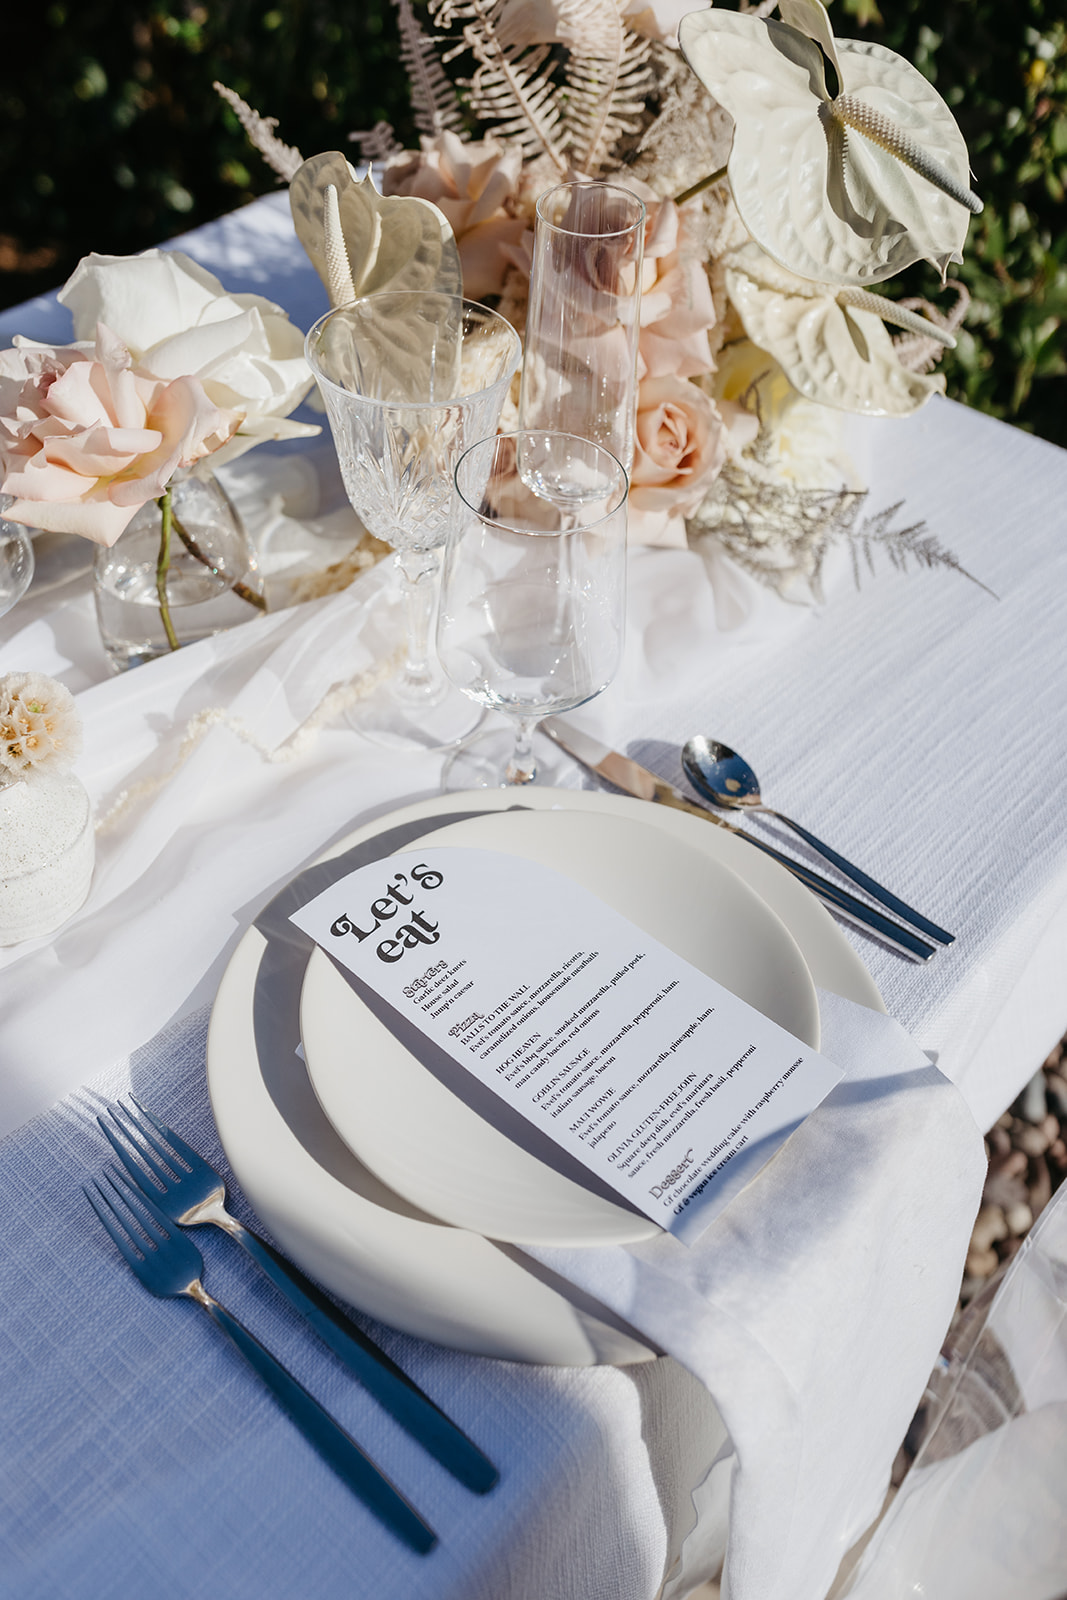 Let's Eat Menu Card for Wedding Reception Plate 